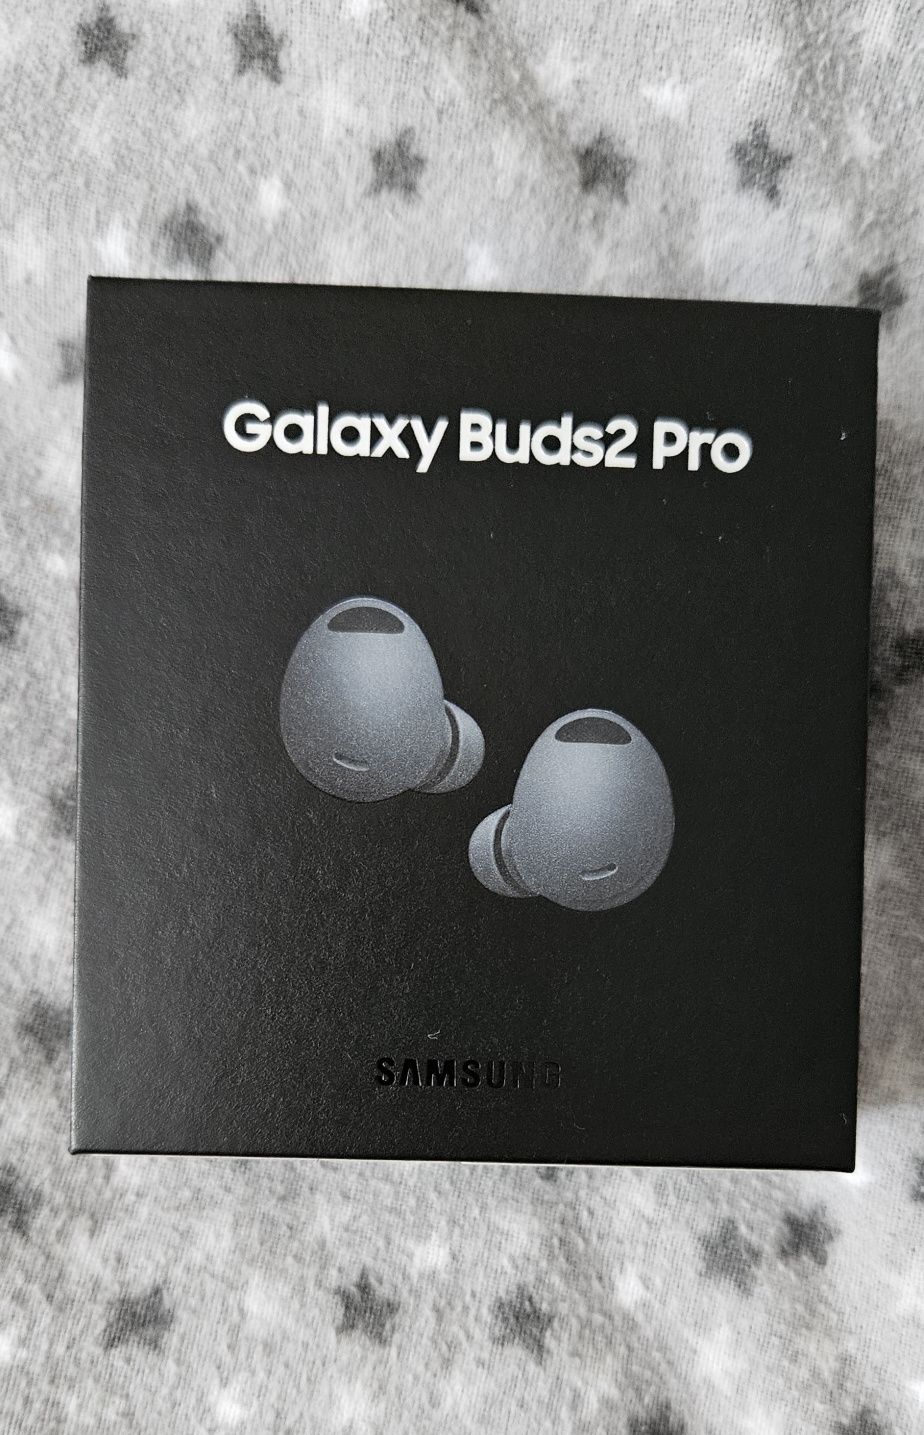 Galaxy Buds2 Pro + Samsung s8